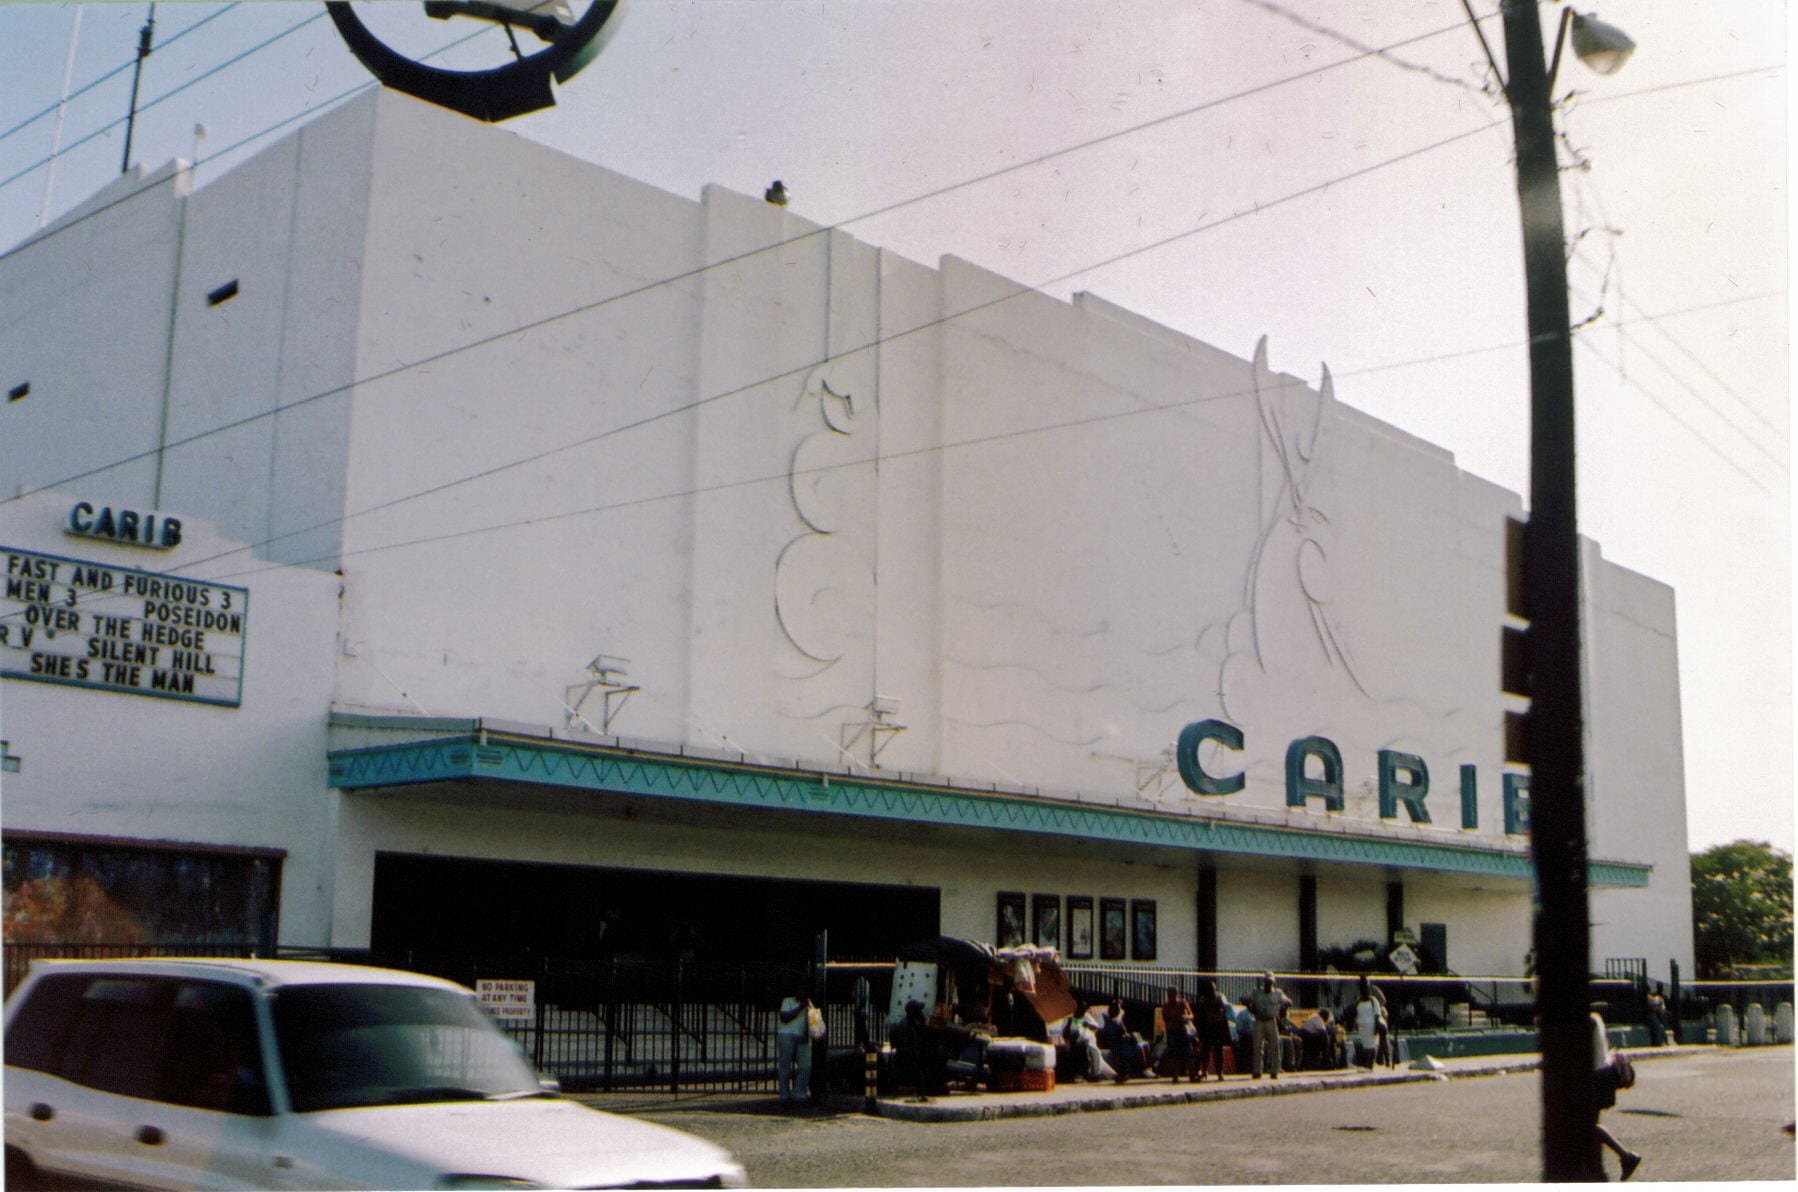 Carib movie theater, Kingston, Jamaica